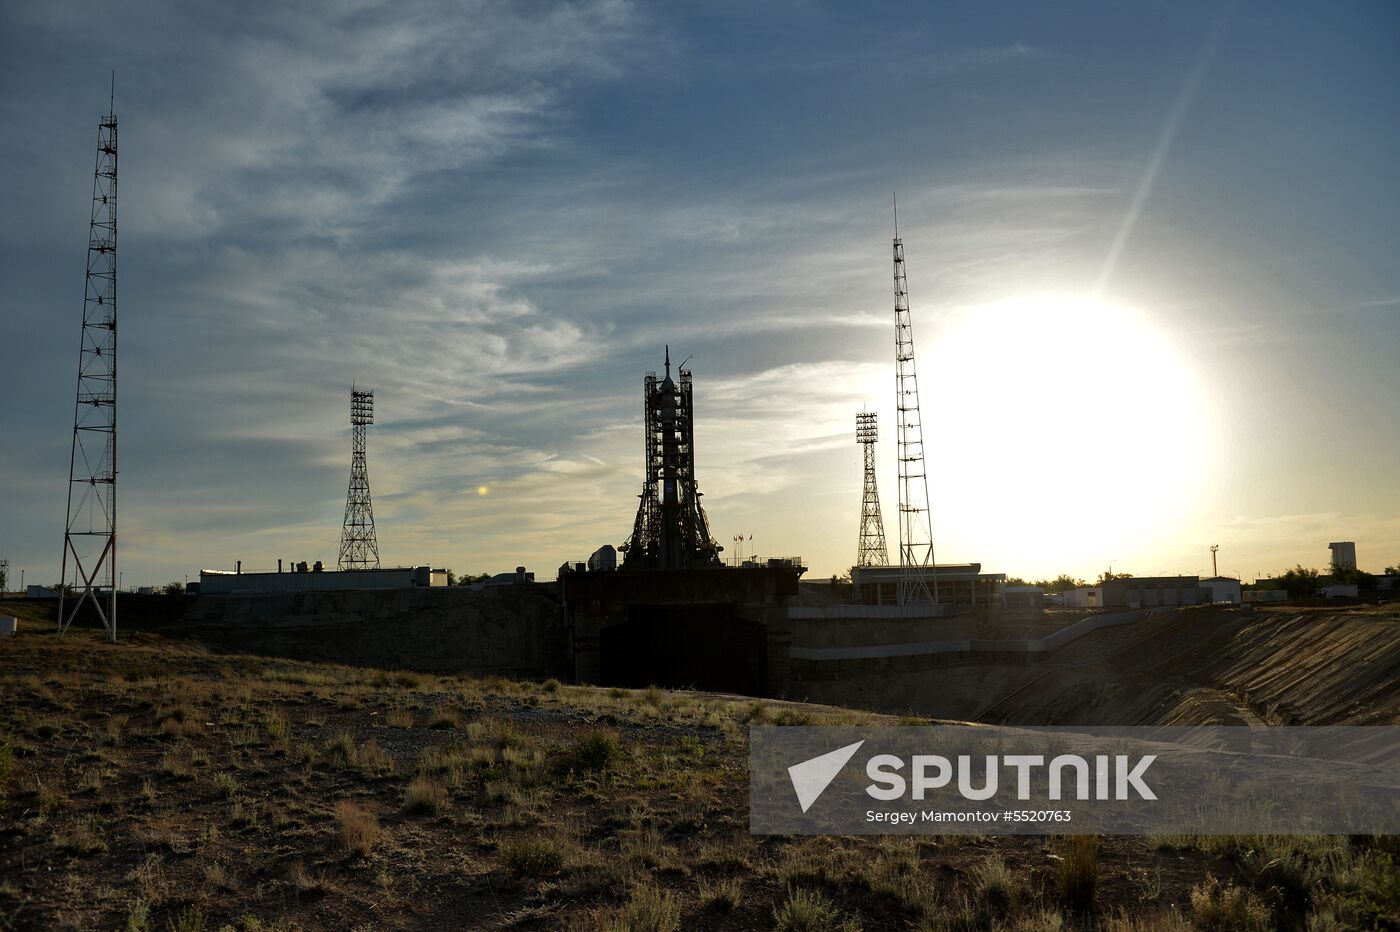 Soyuz-FG launch vehicle with Soyuz MS-09 manned spacecraft